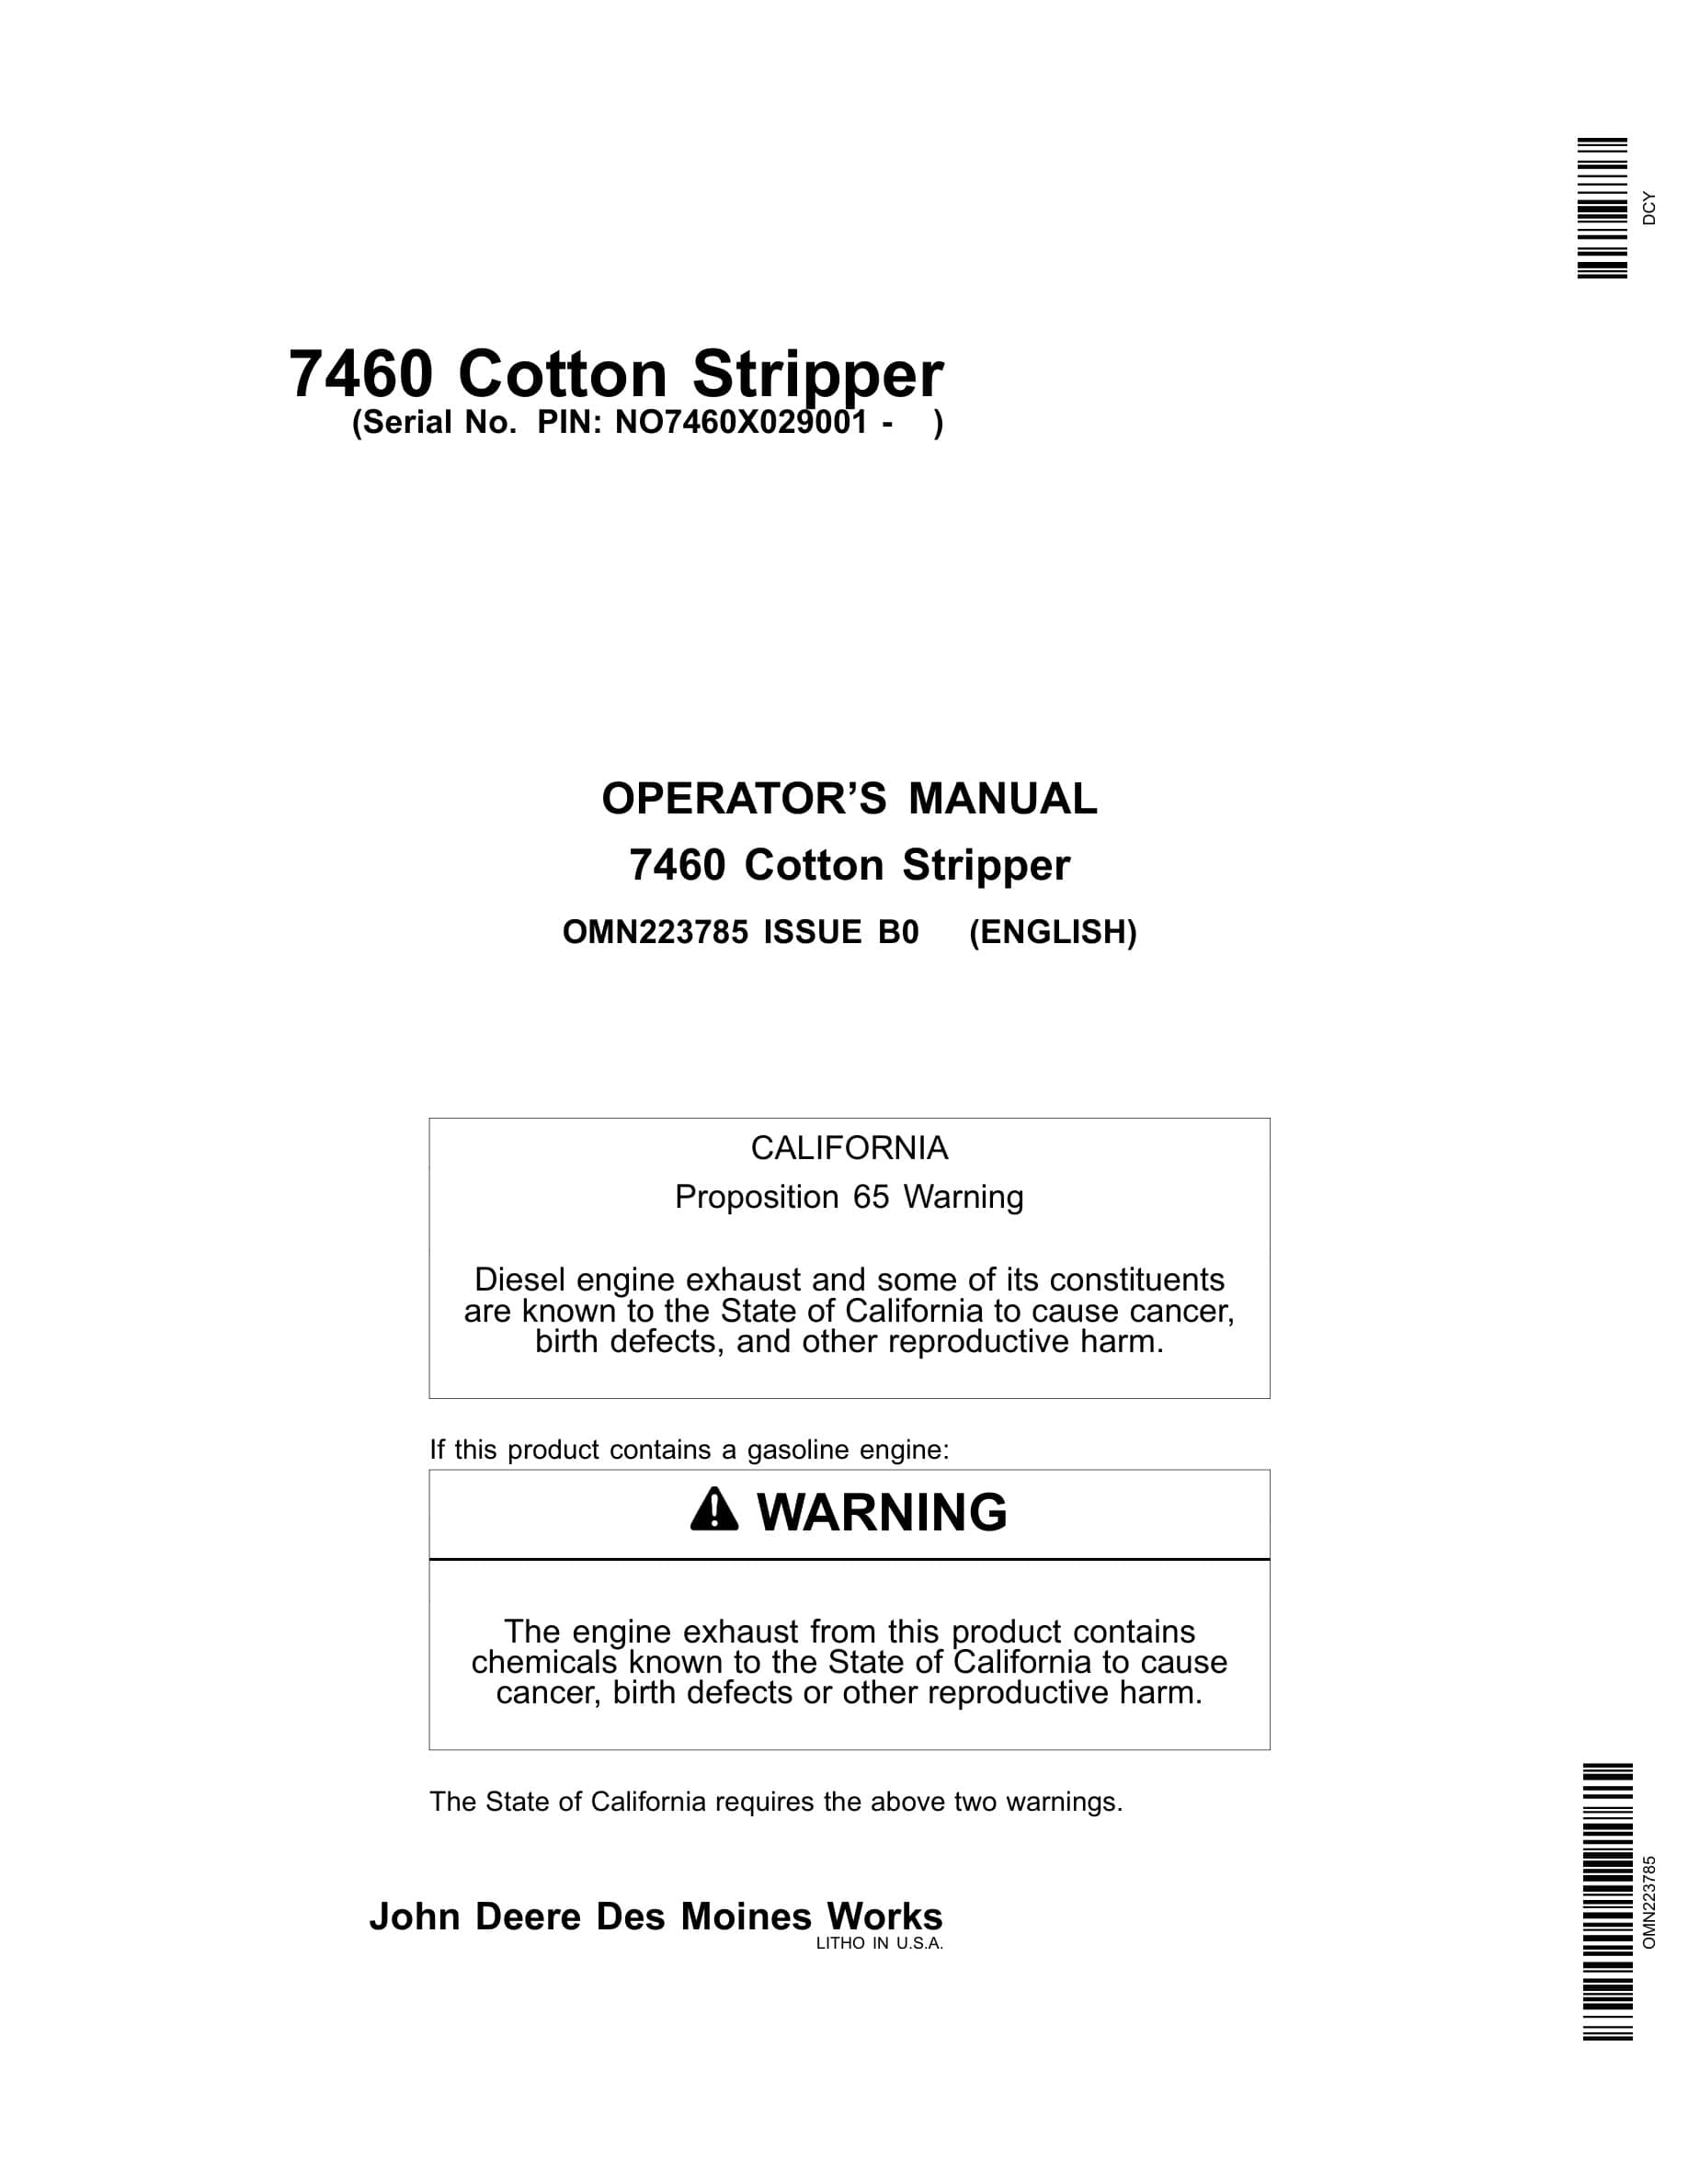 John Deere 7460 Cotton Stripper Operator Manual OMN223785-1